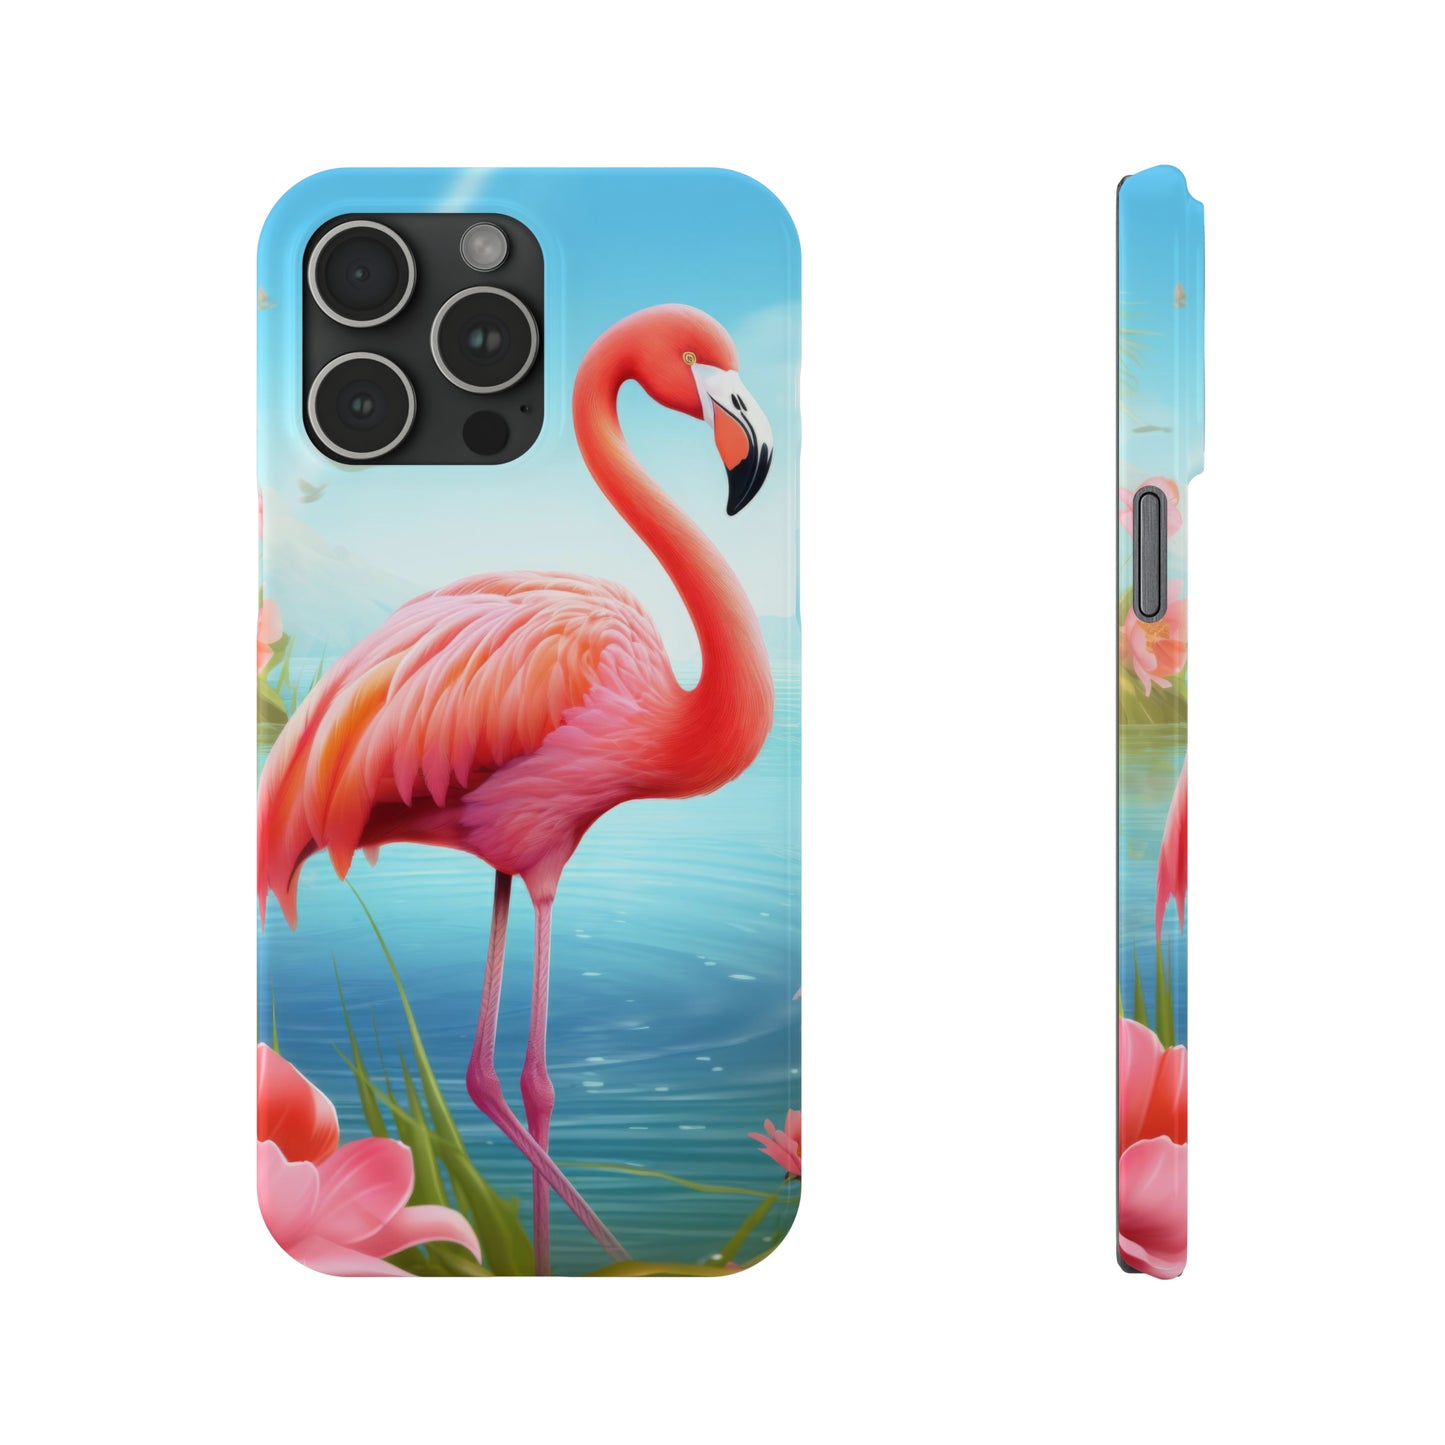 Tropical Flamingo iPhone Case